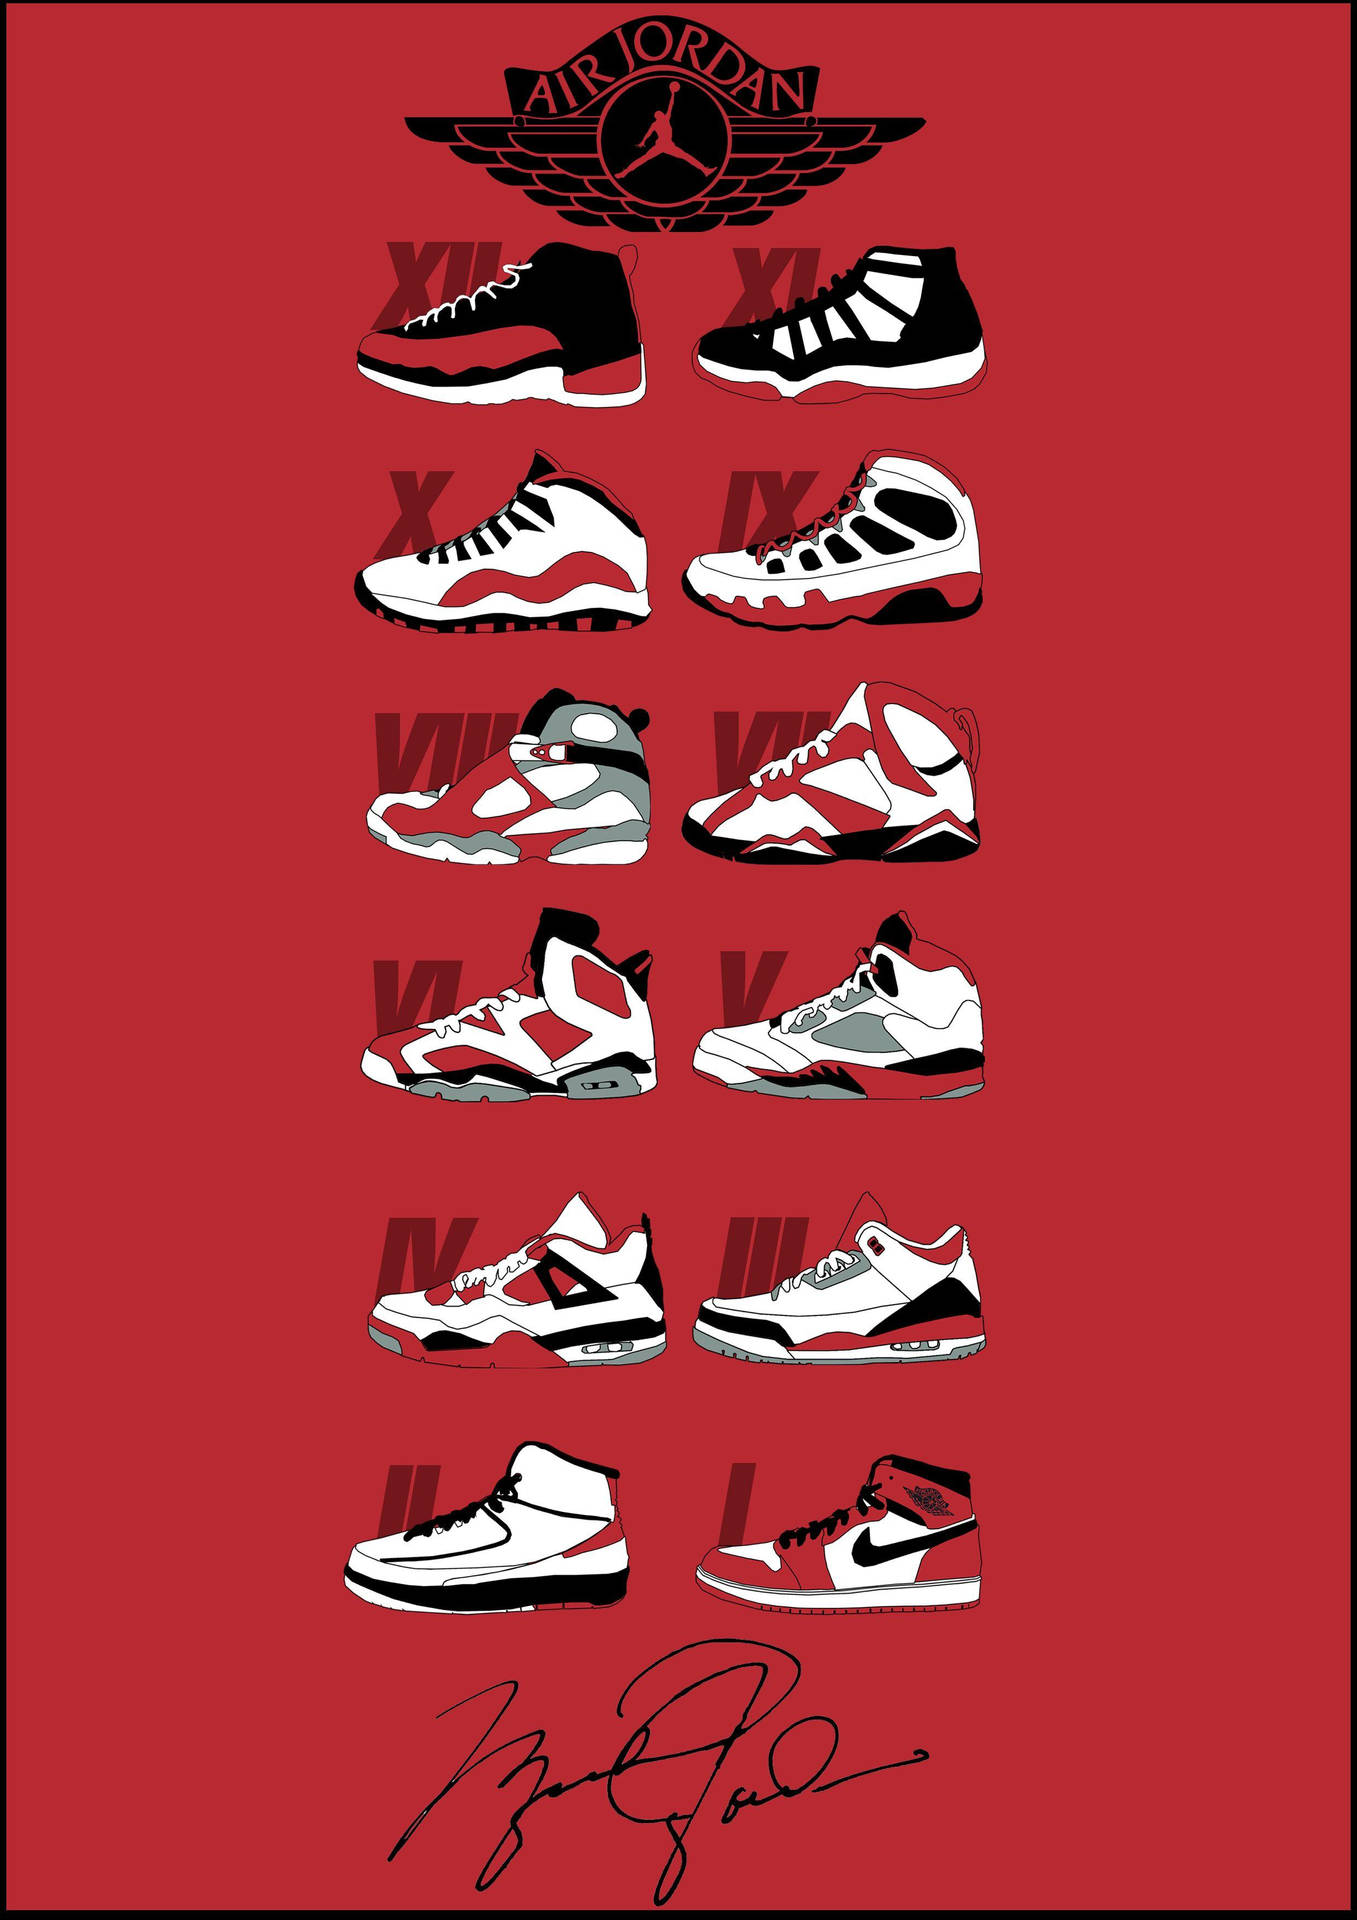 Red Aesthetic Cartoon Shoe Wallpaper